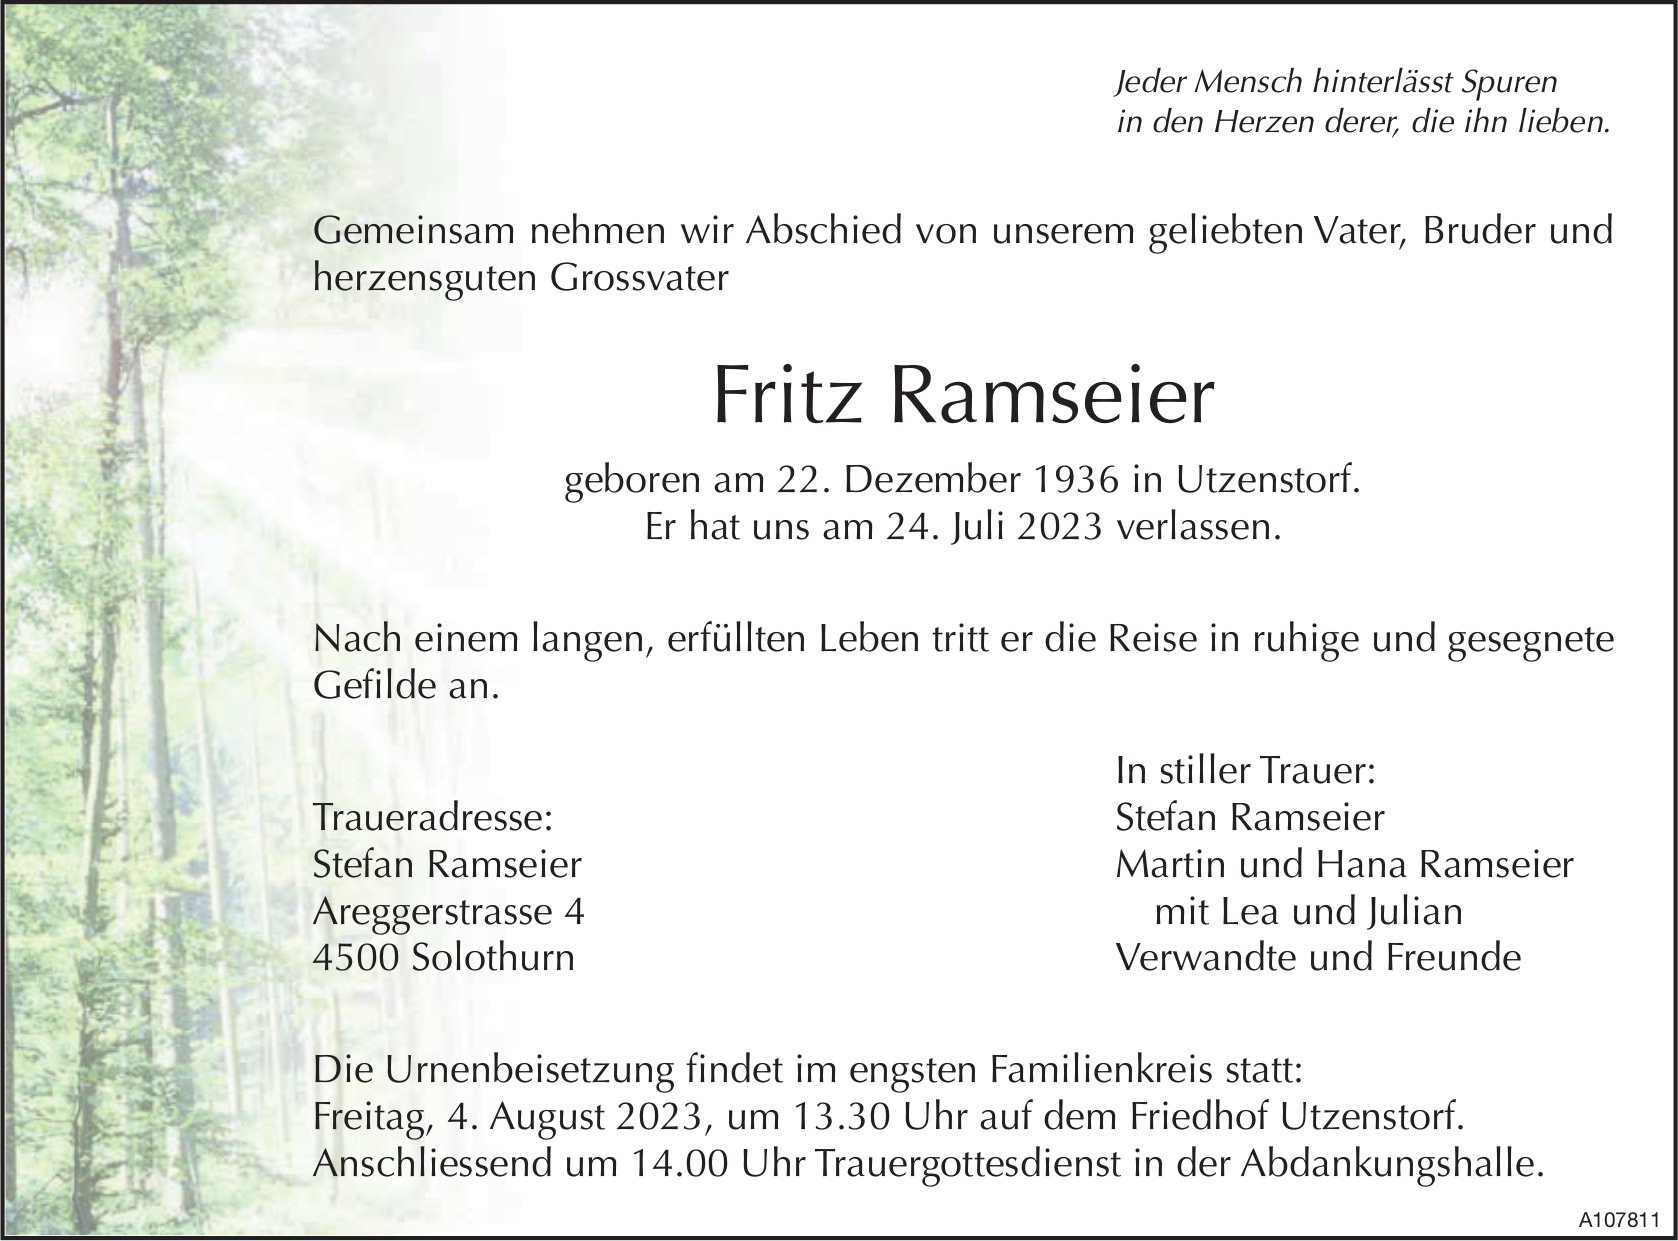 Fritz Ramseier, Juli 2023 / TA